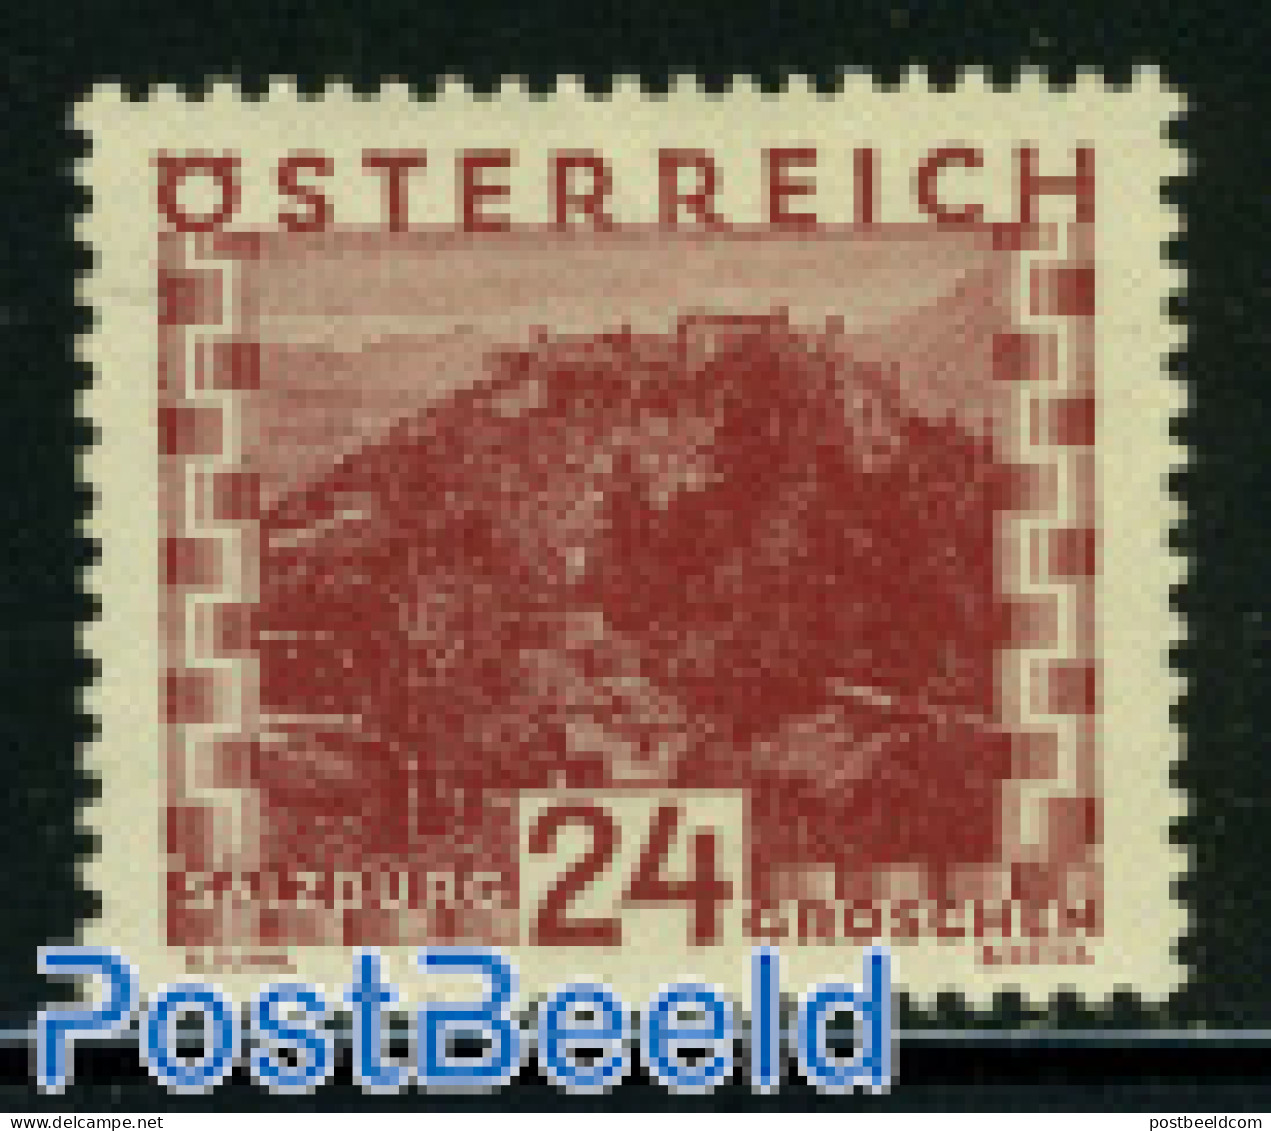 Austria 1929 24g, Redcarmine, Stamp Out Of Set, Unused (hinged) - Nuovi